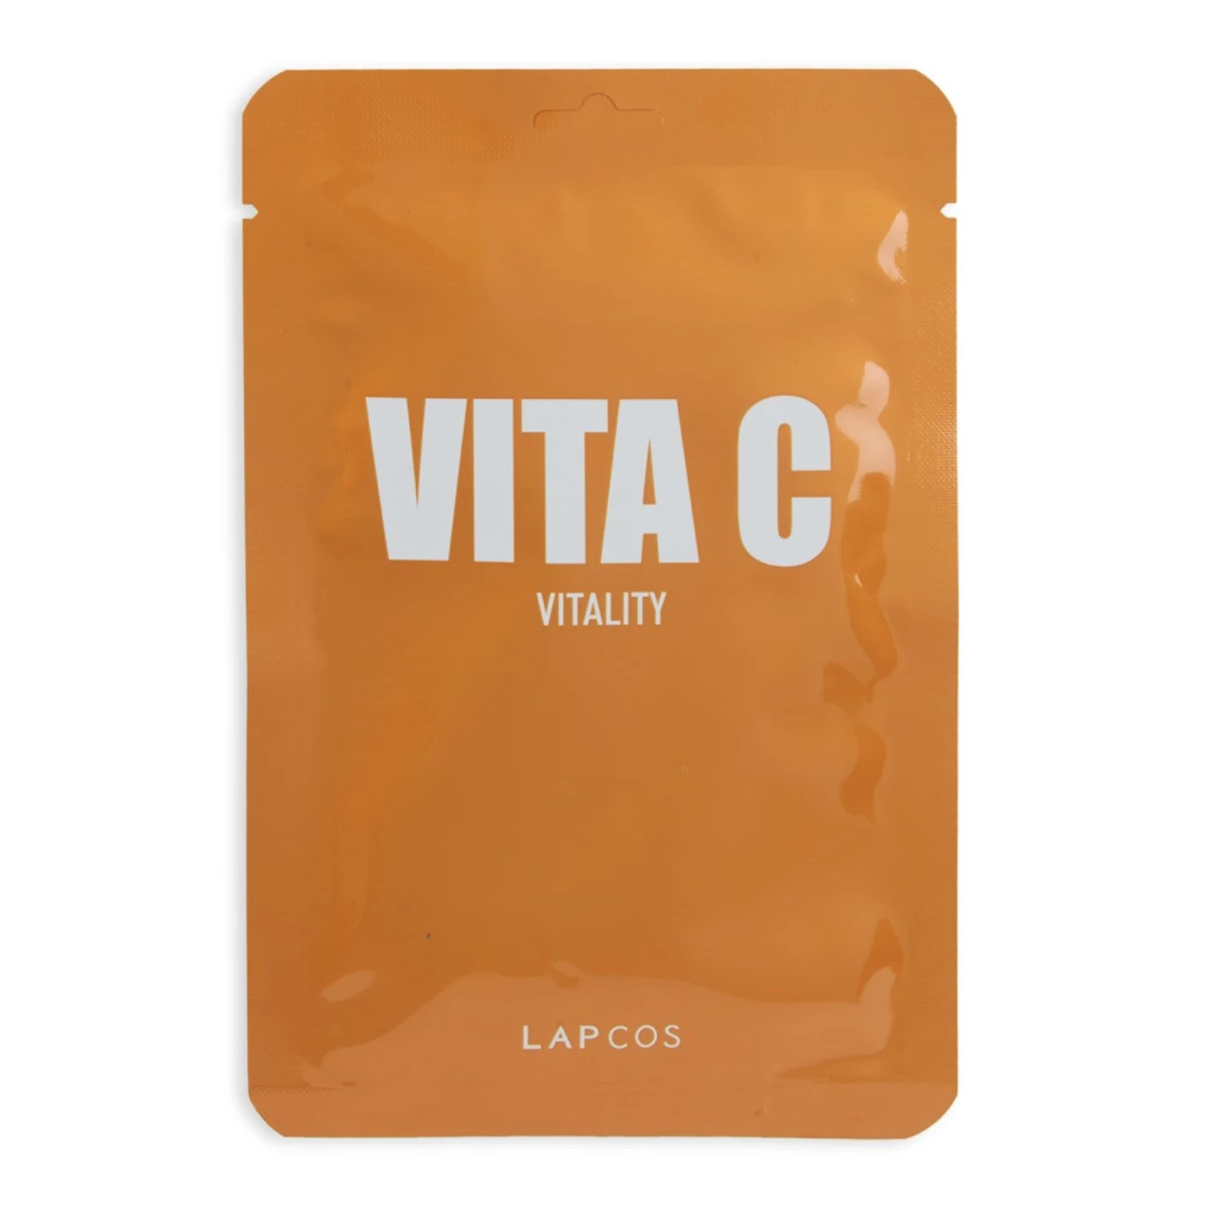 Orange face mask packaging that reads &quot;VITA C VITALITY LAPCOS&quot;